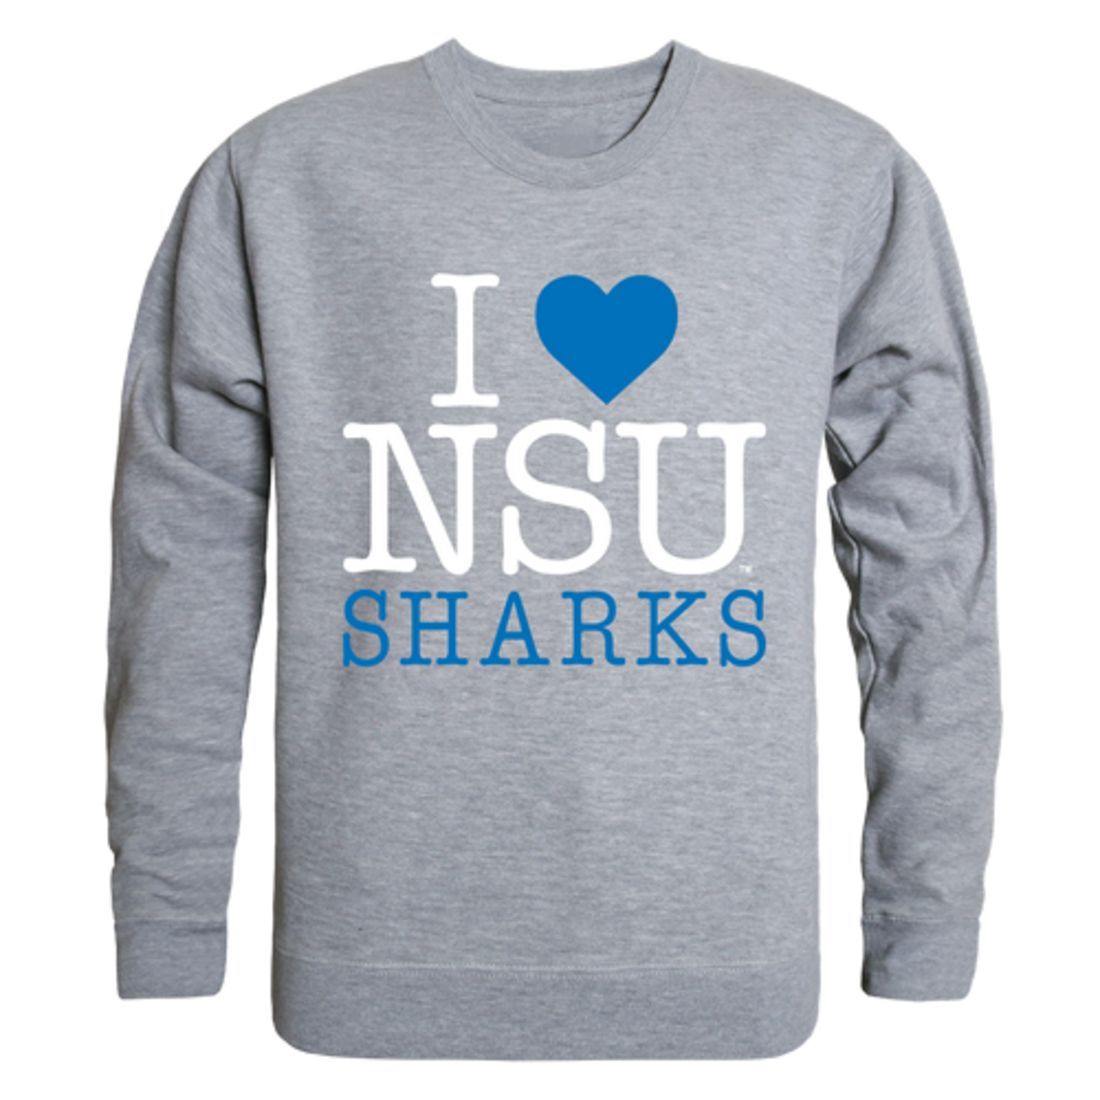 I Love NSU Nova Southeastern University Sharks Crewneck Pullover Sweatshirt Sweater-Campus-Wardrobe